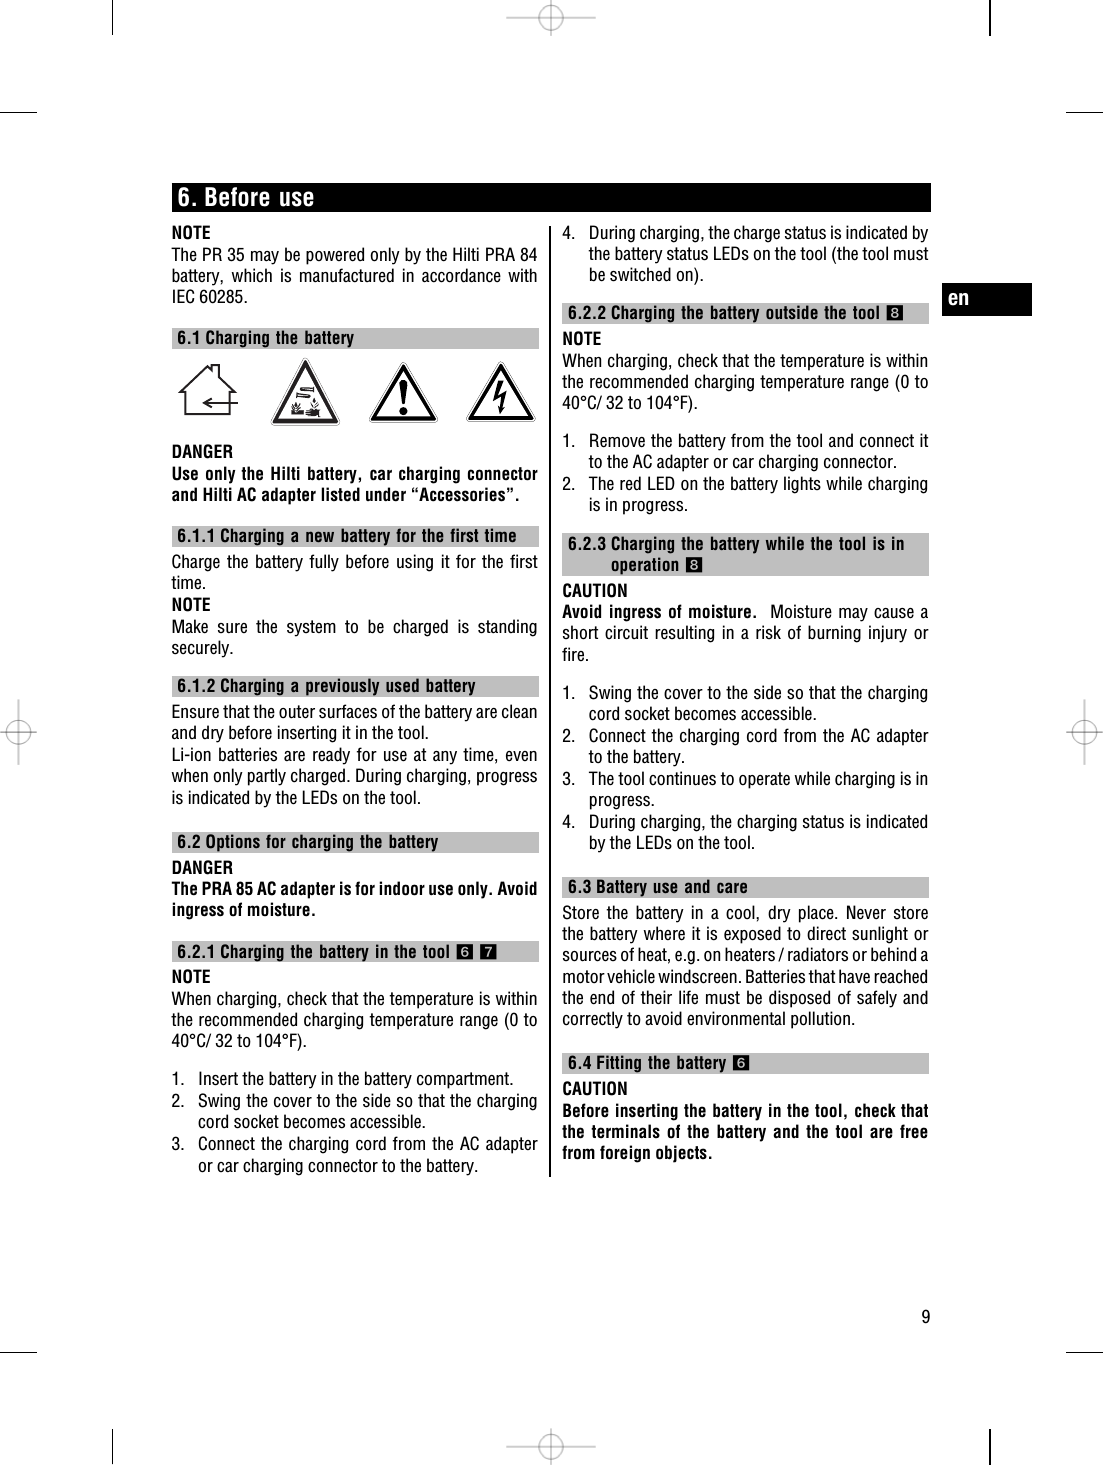 Abaqus user manual 6.10 pdf download